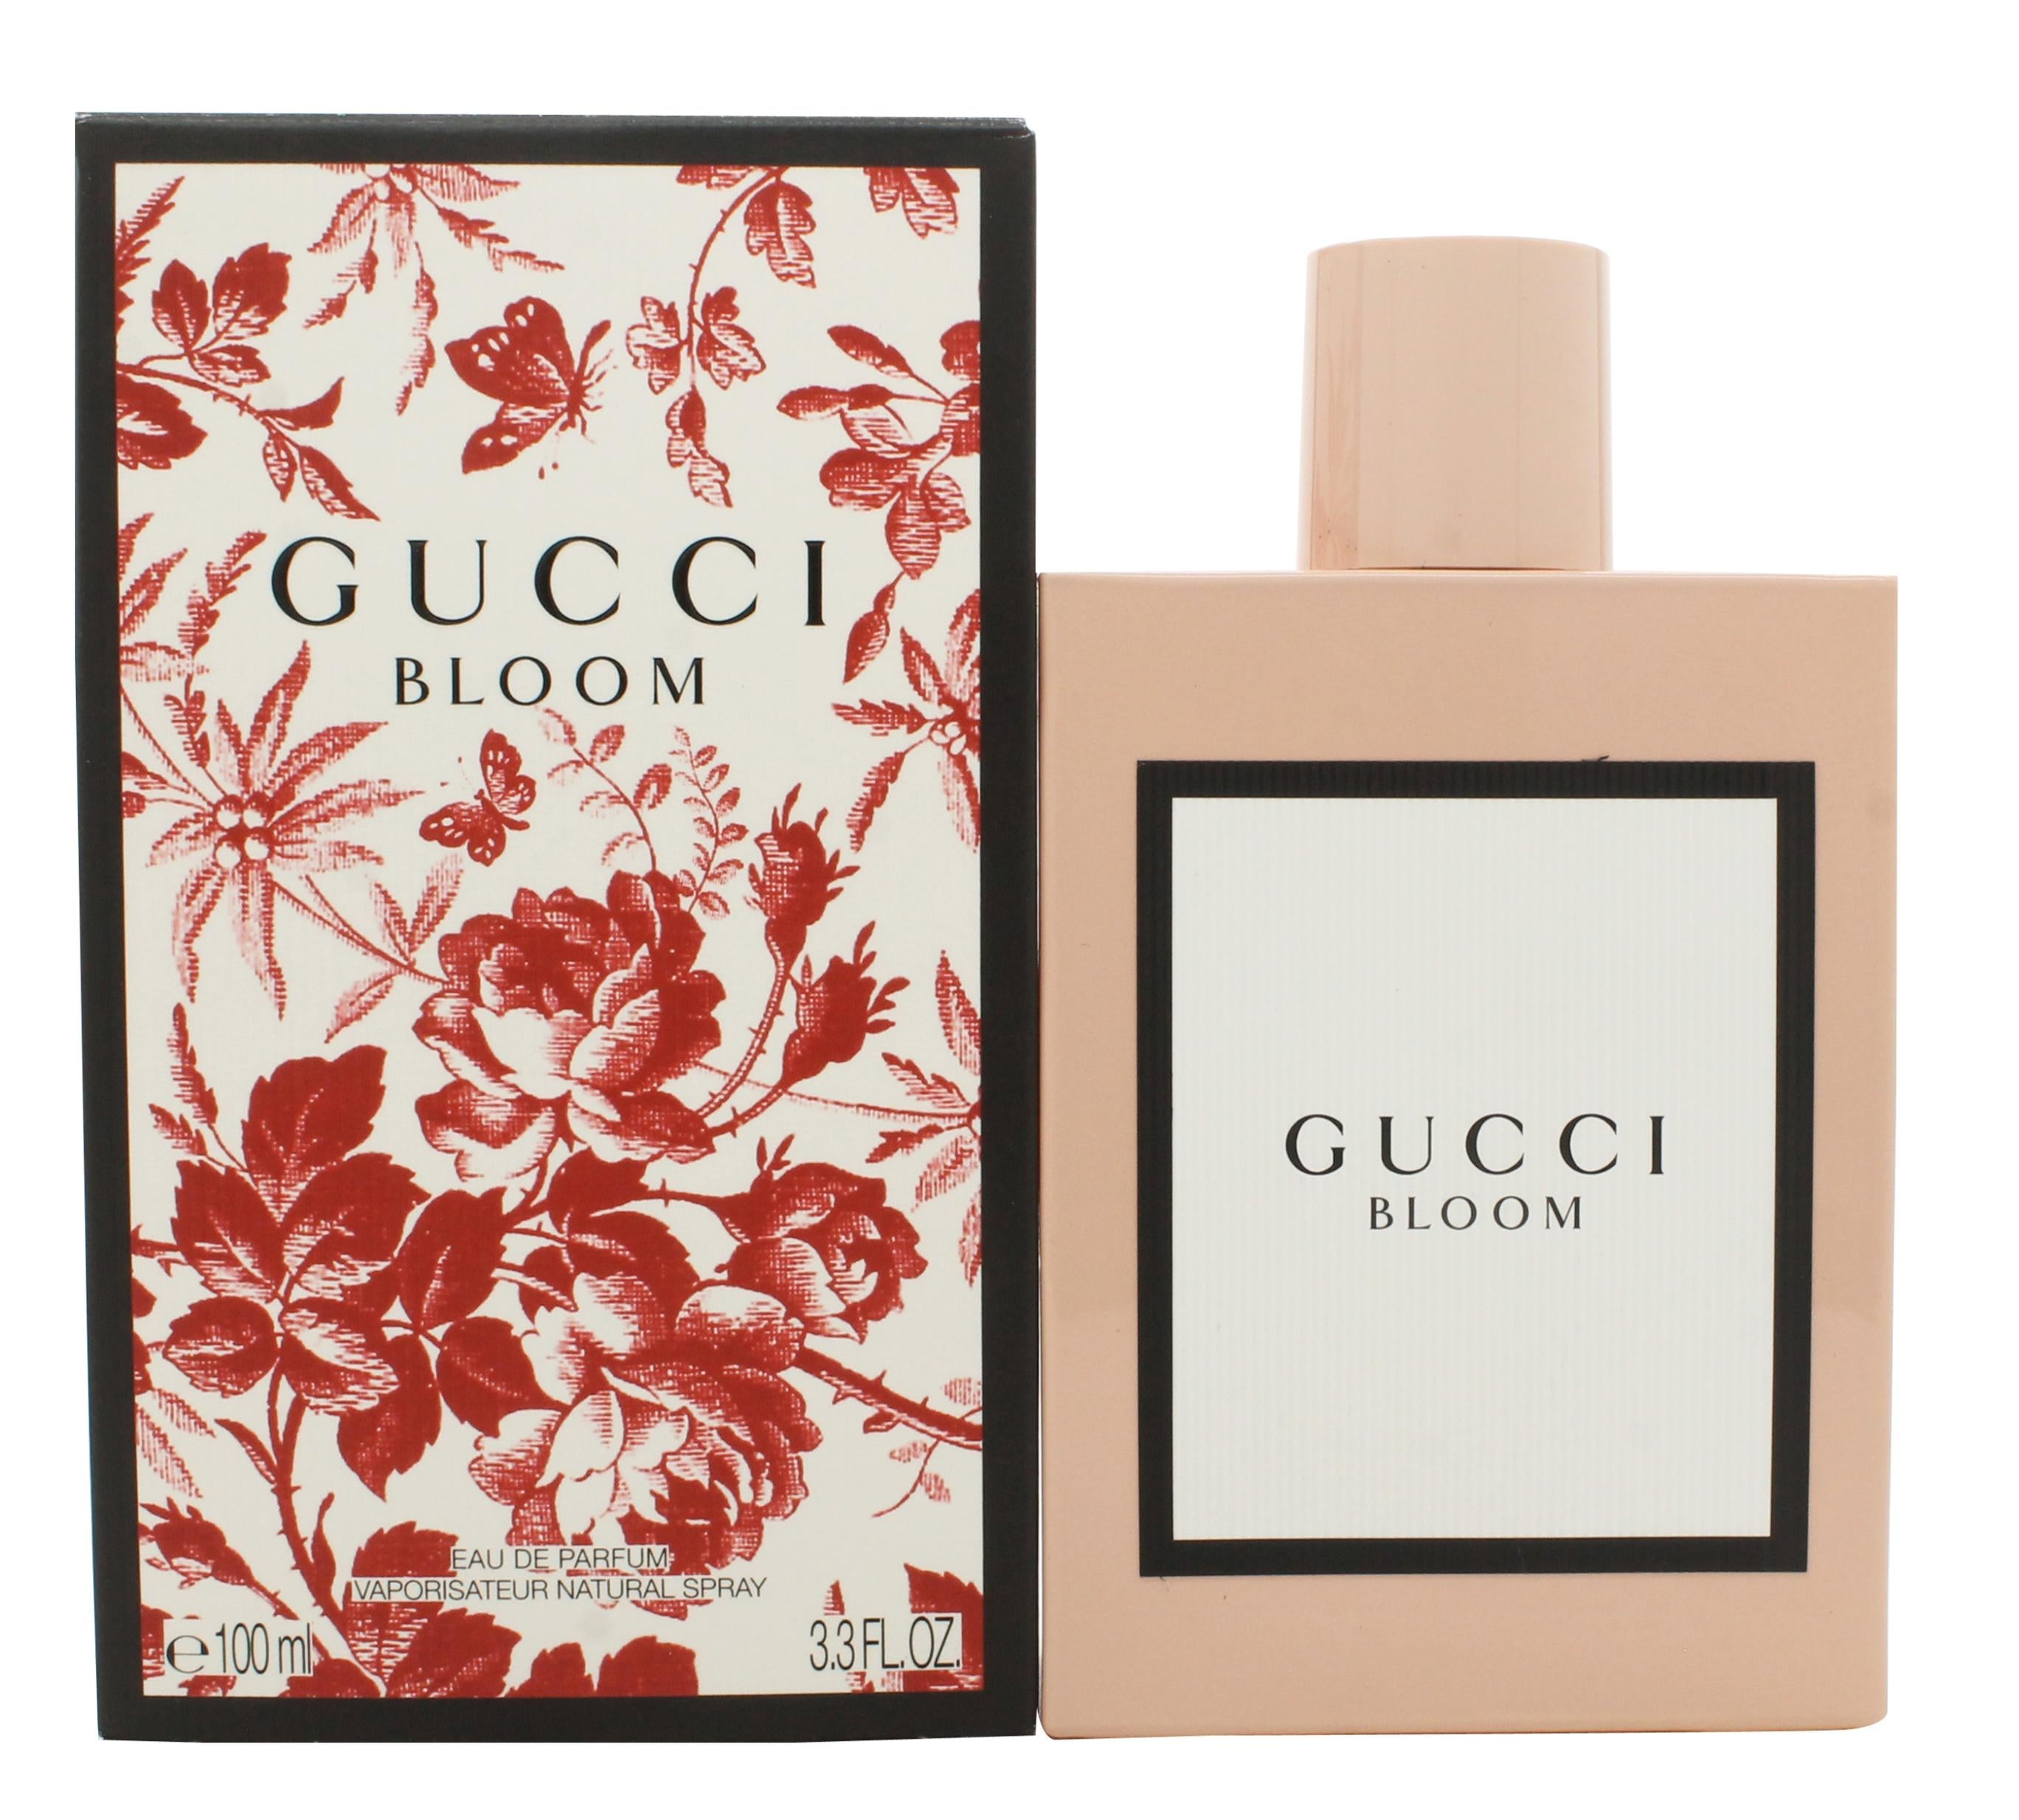 View Gucci Bloom Eau de Parfum 100ml Spray information